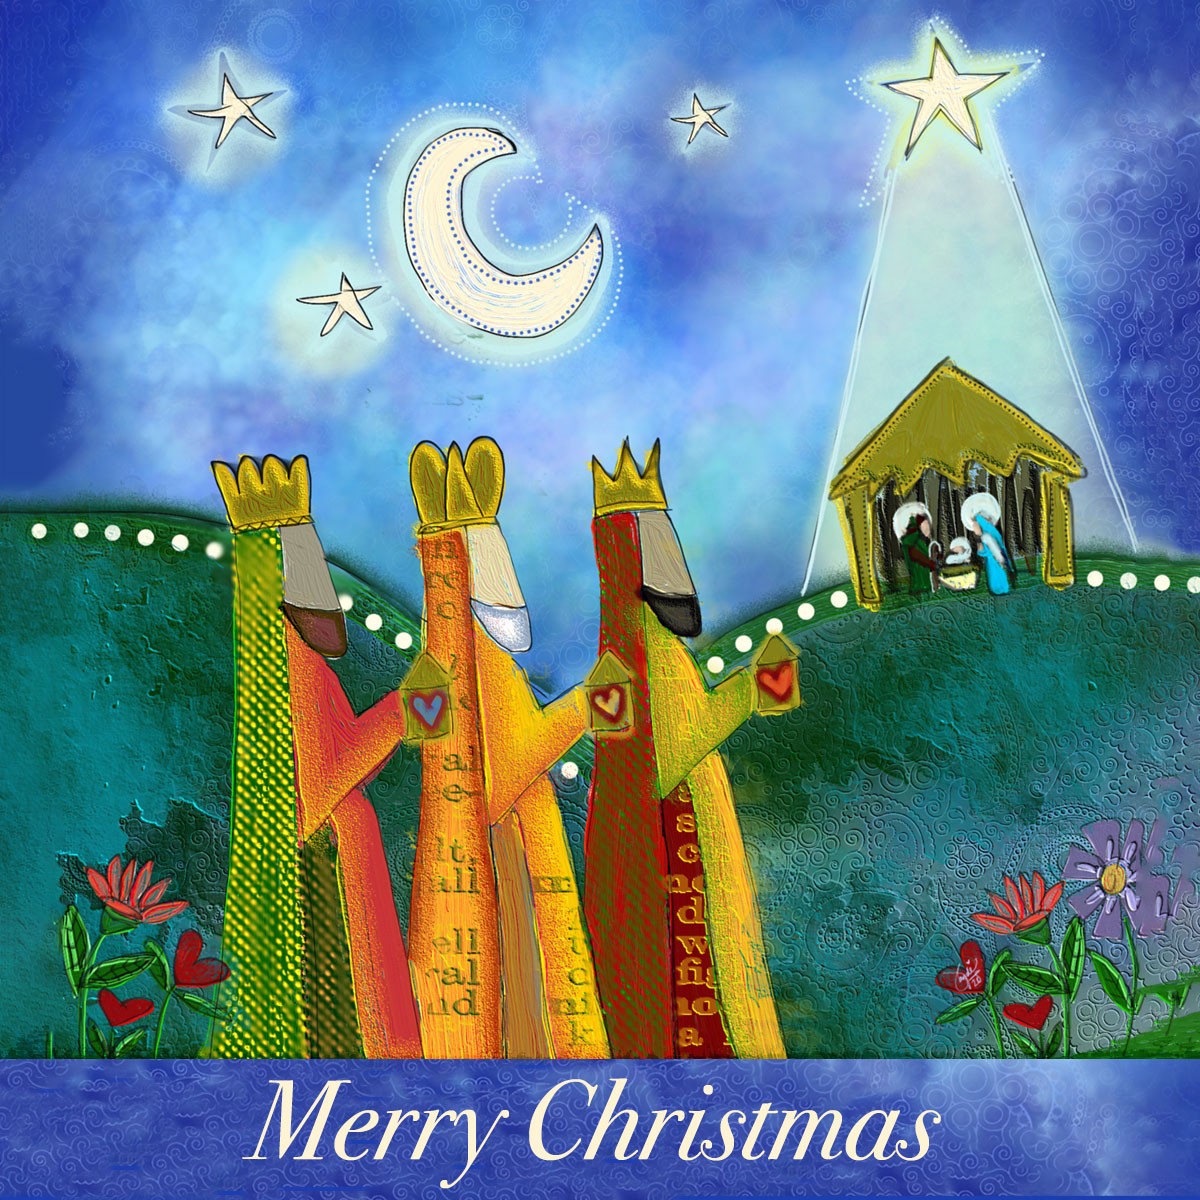 Merry Chrismas card artwork of the theww kings in Bethlehem by St. Jude survivor Tayde.